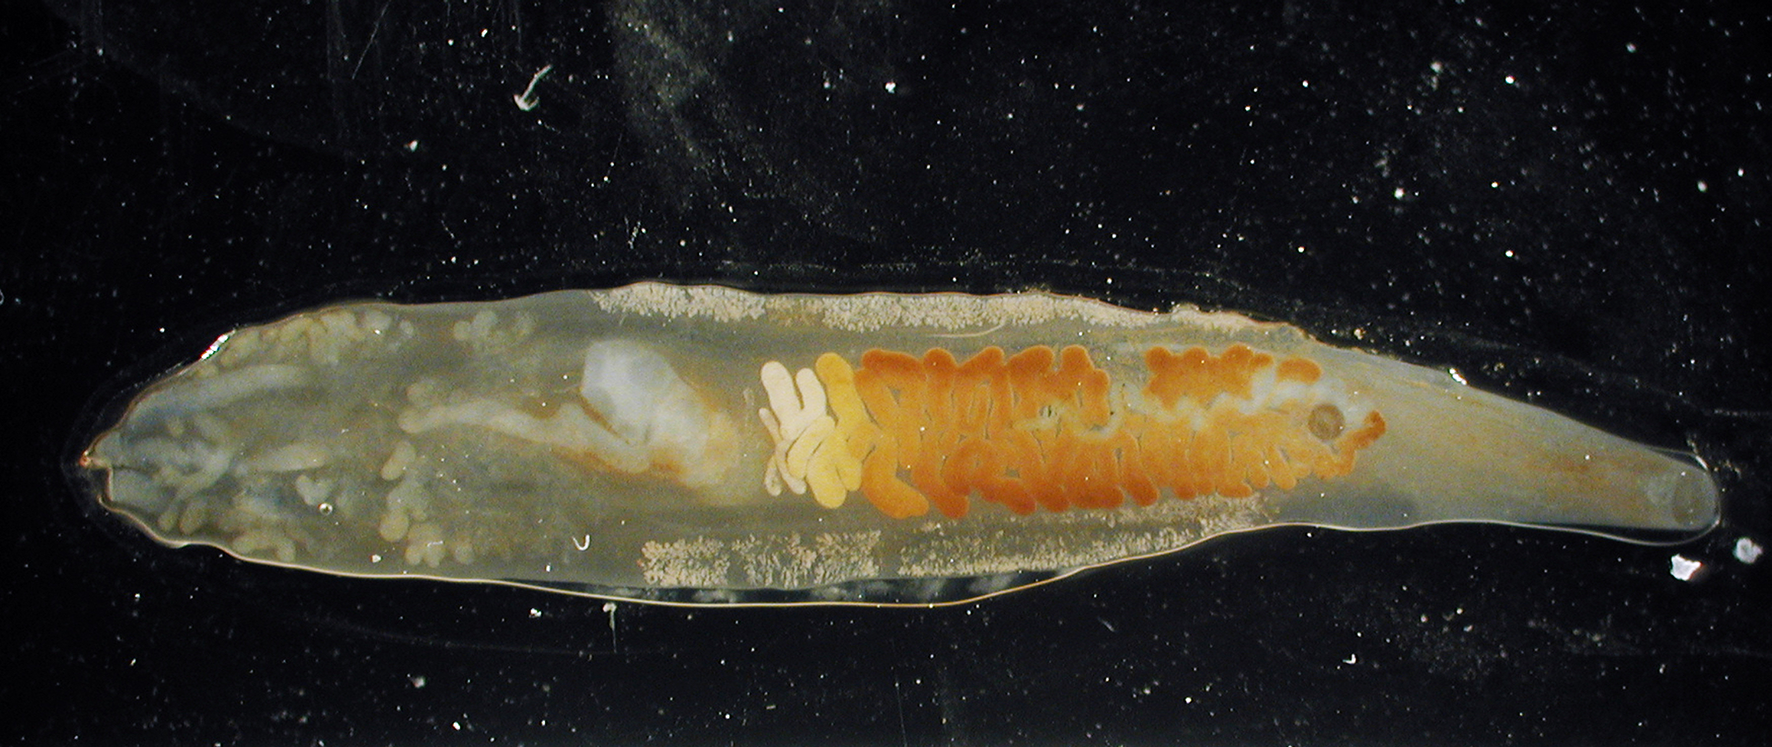 Clonorchis sinensis under microscope.